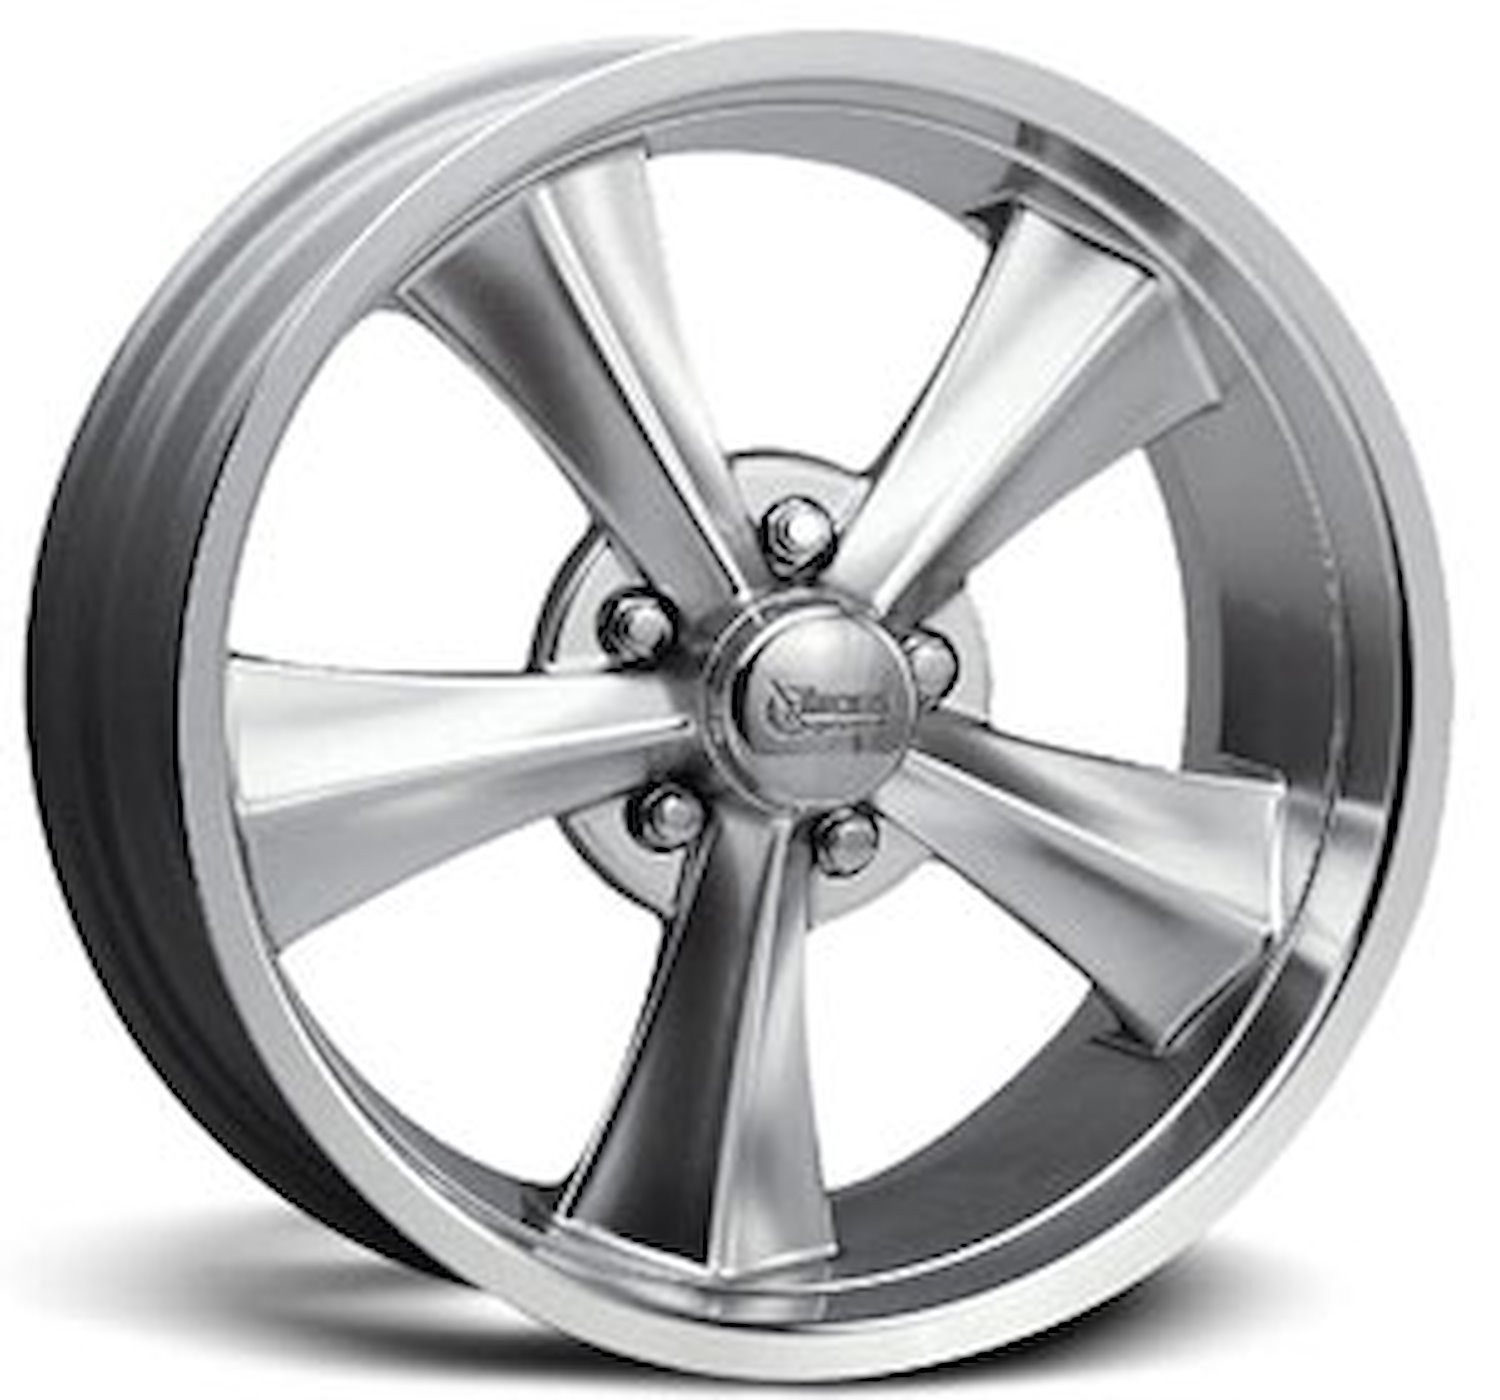 Booster Wheel - Hyper Silver Size: 17" x 8"